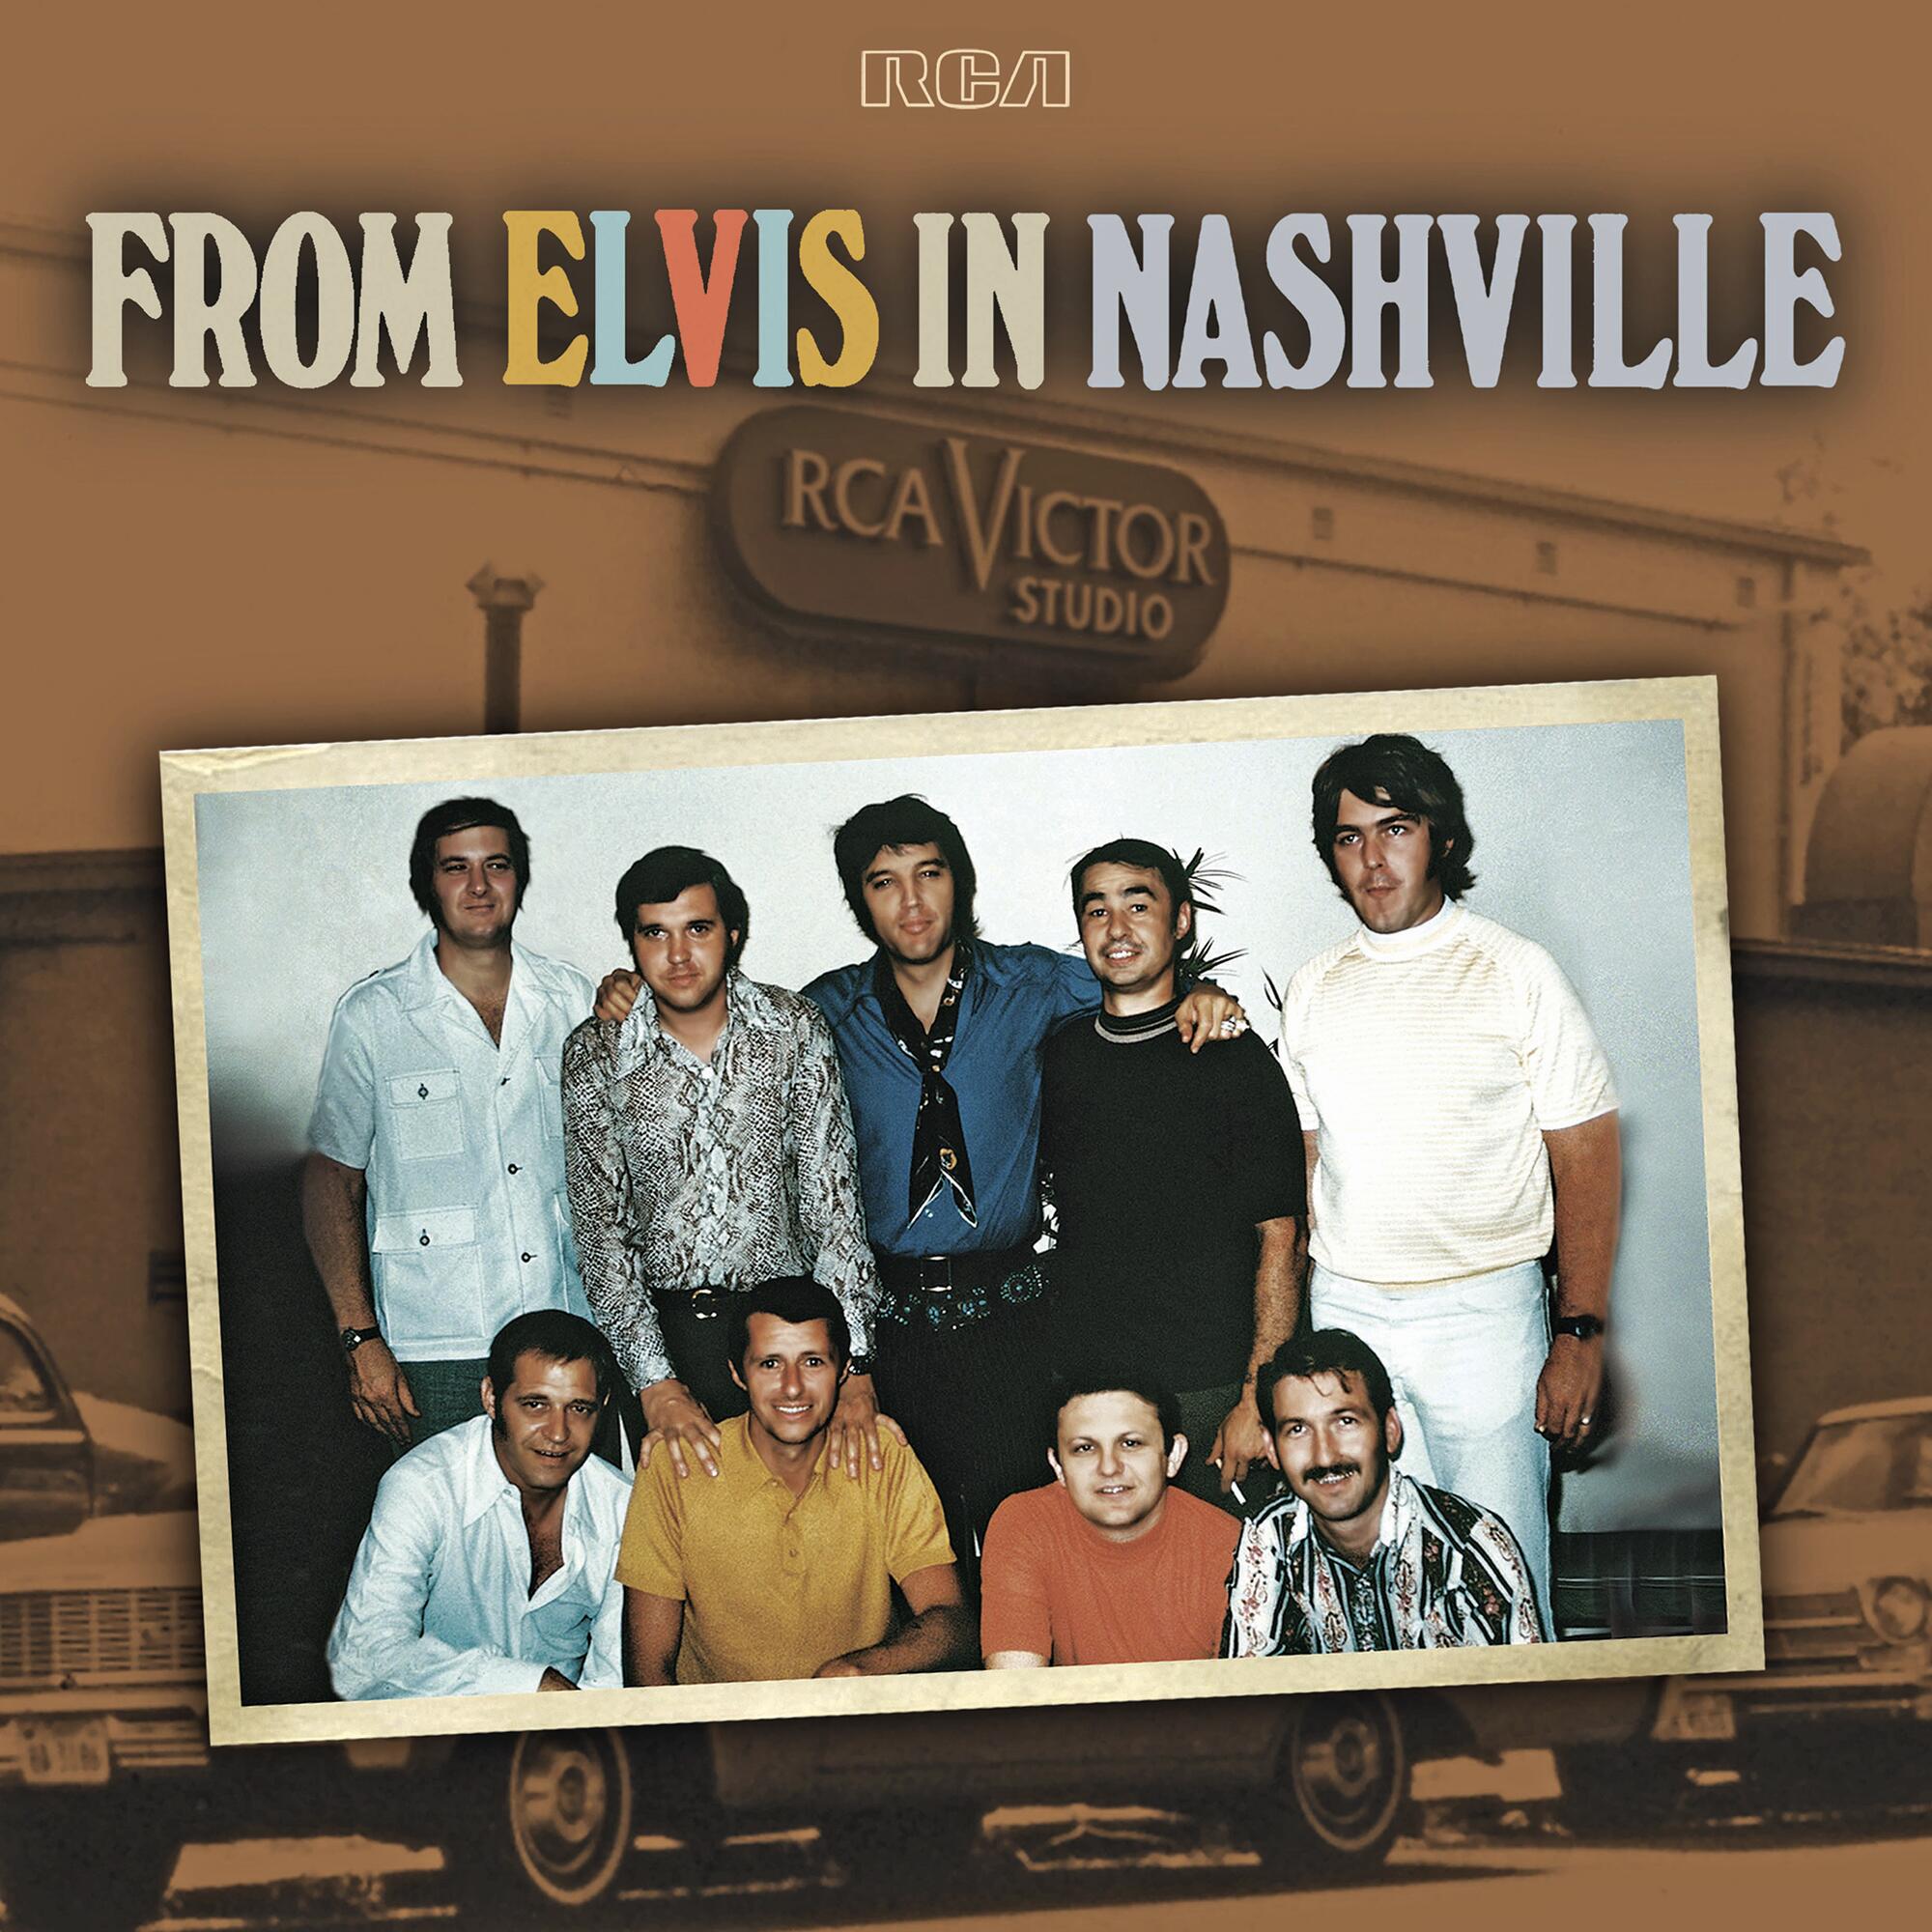 "From Elvis in Nashville" four-disc set